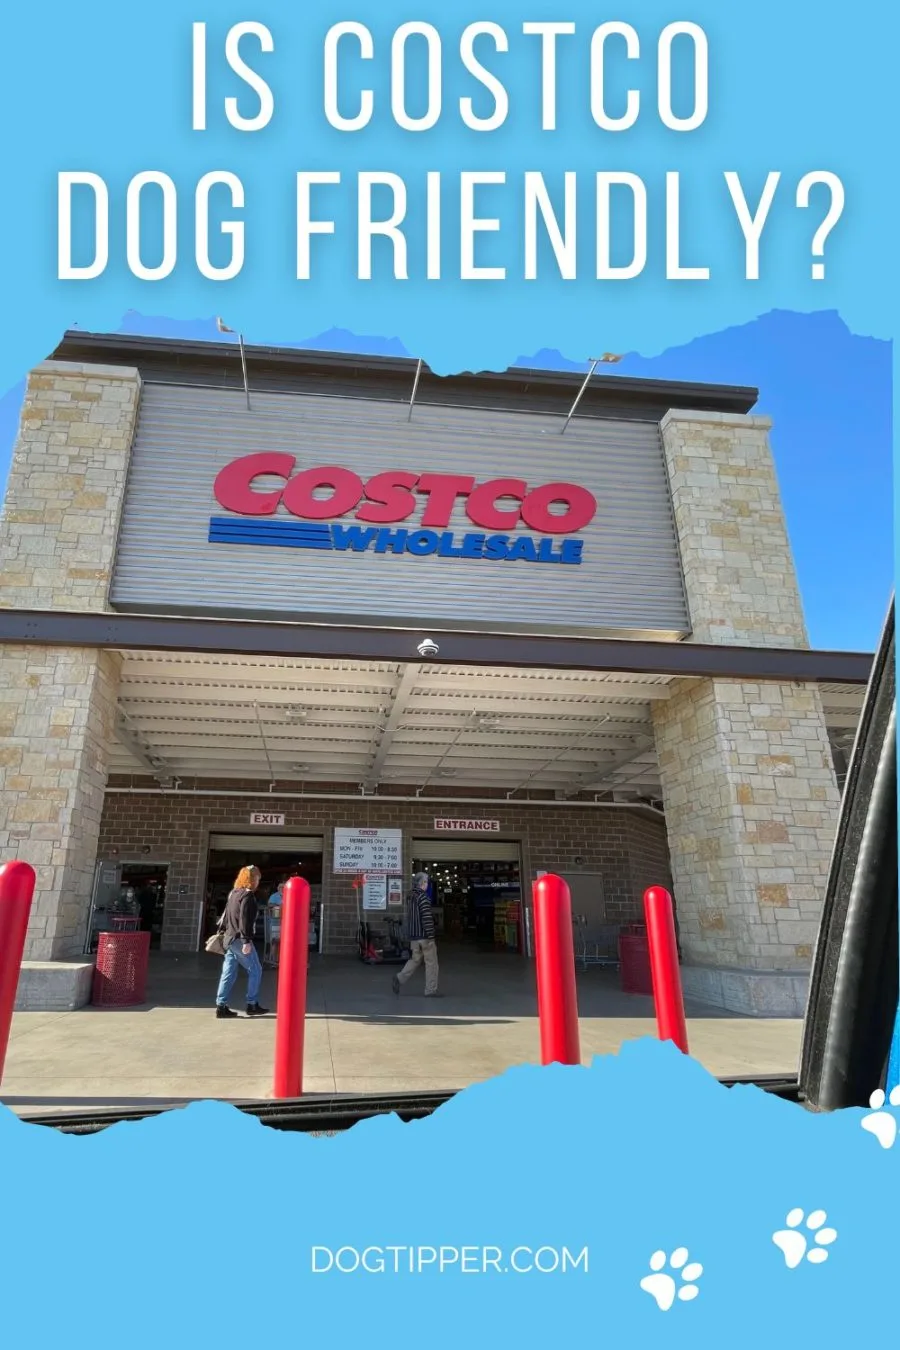 Is Costco Dog Friendly?